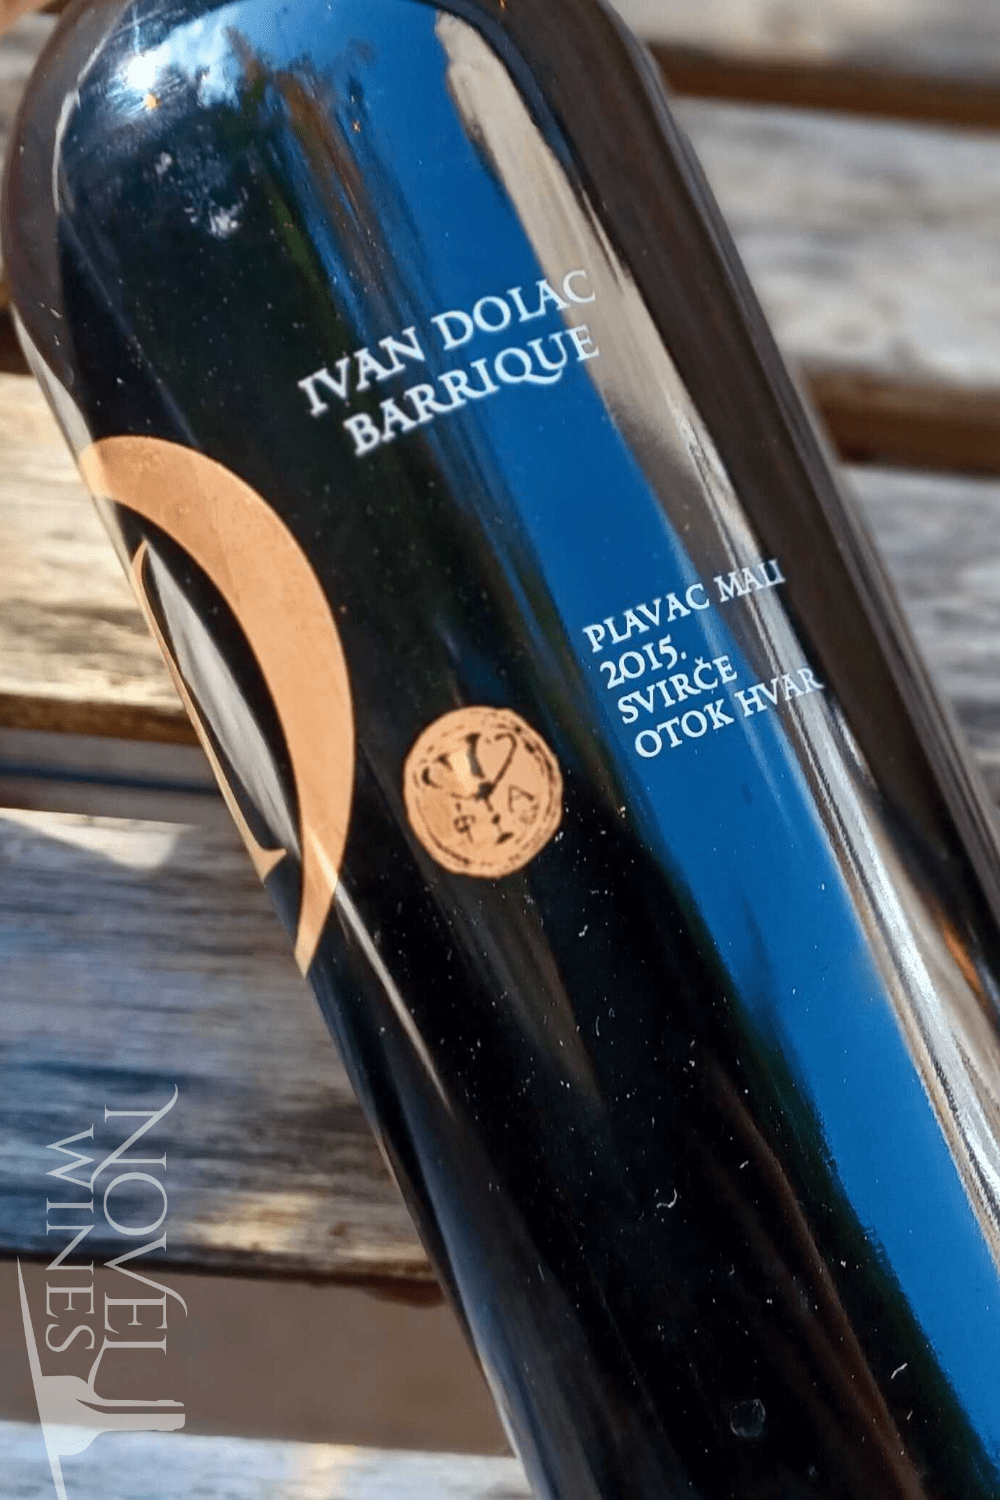 Badel Red Wine Badel Ivan Dolac Barrique 2015, Croatia